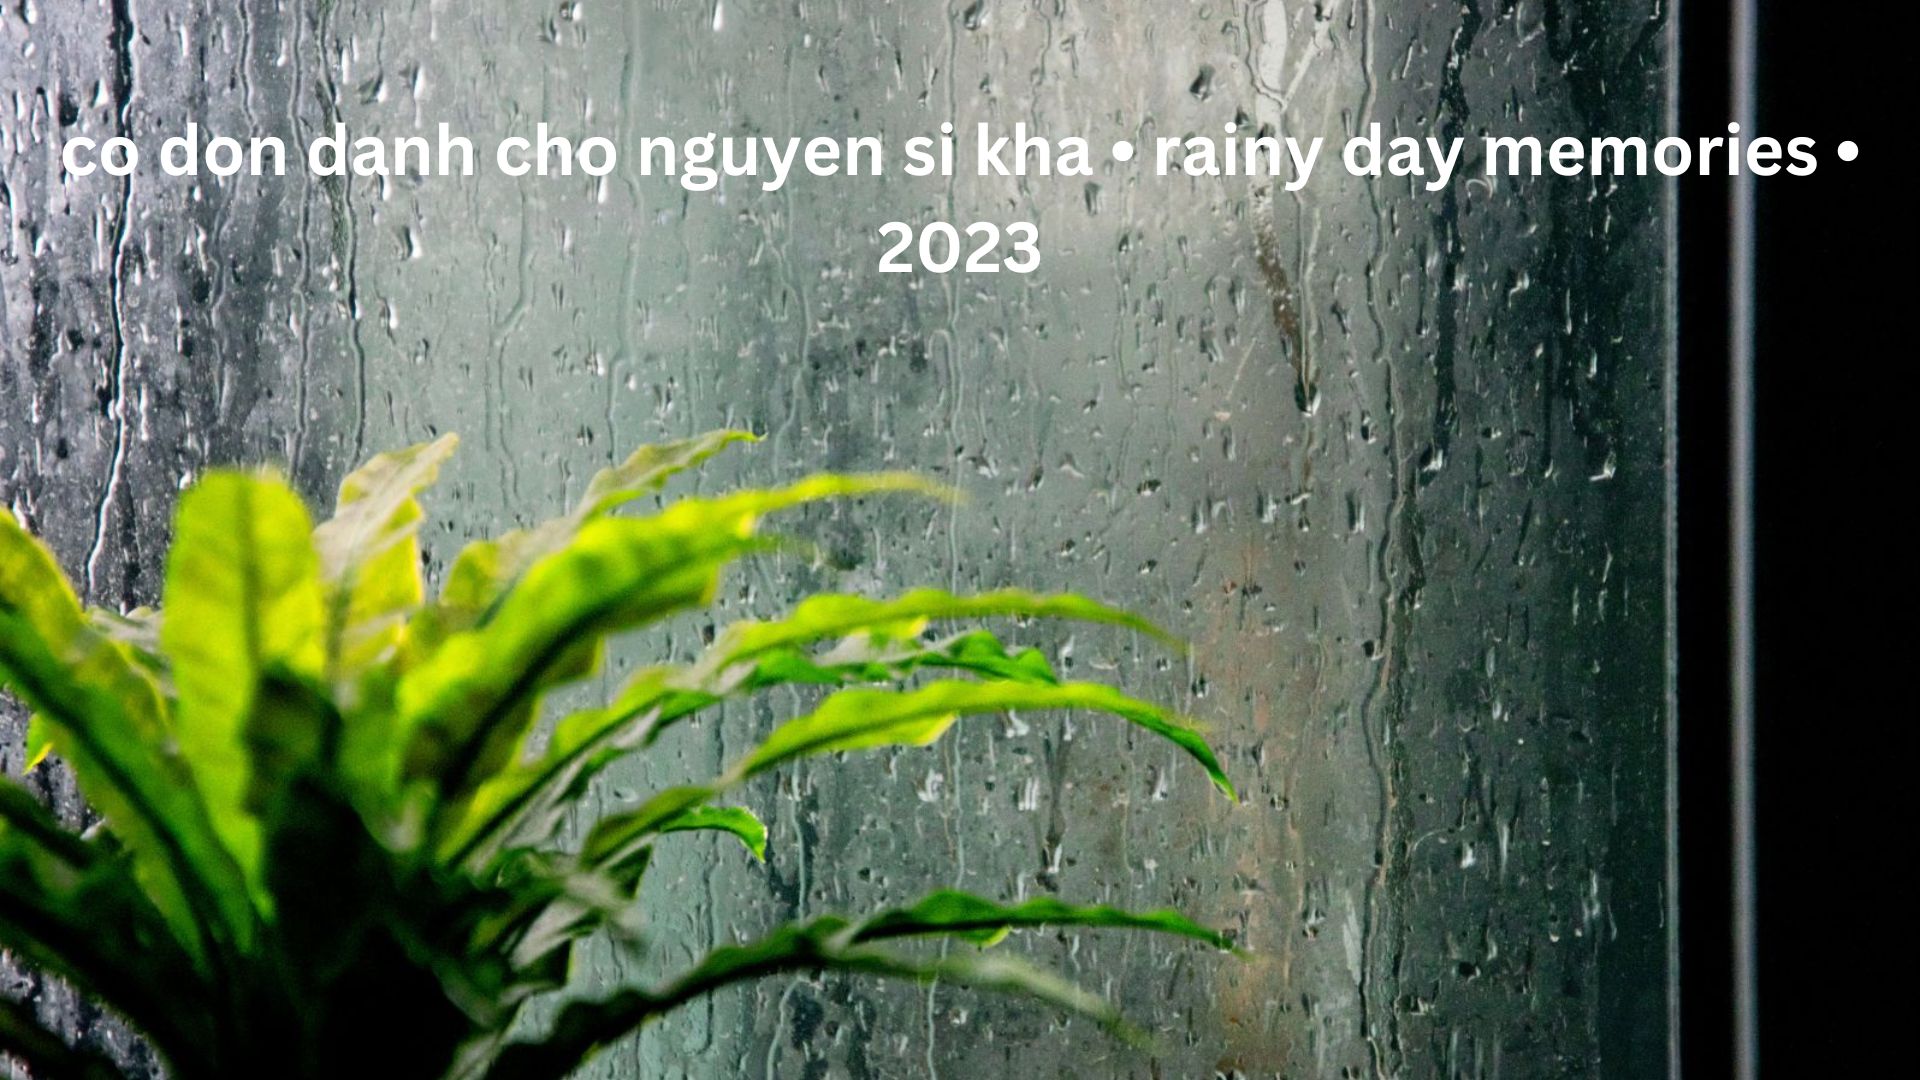 Co Don Danh Cho Nguyen Si Kha • Rainy Day Memories • 2023